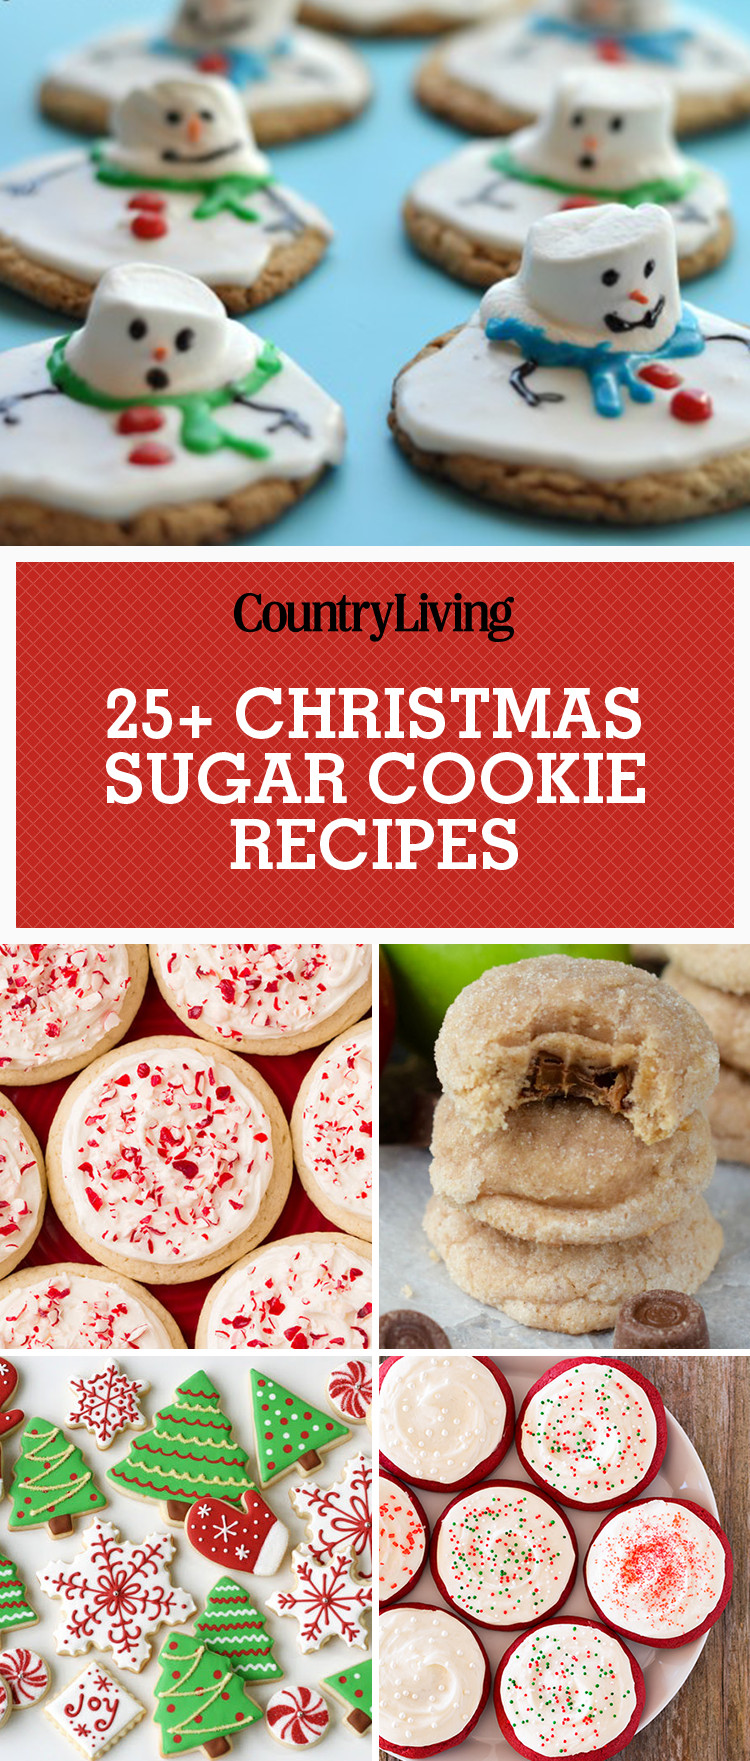 Christmas Sugar Cookies
 25 Easy Christmas Sugar Cookies Recipes & Decorating